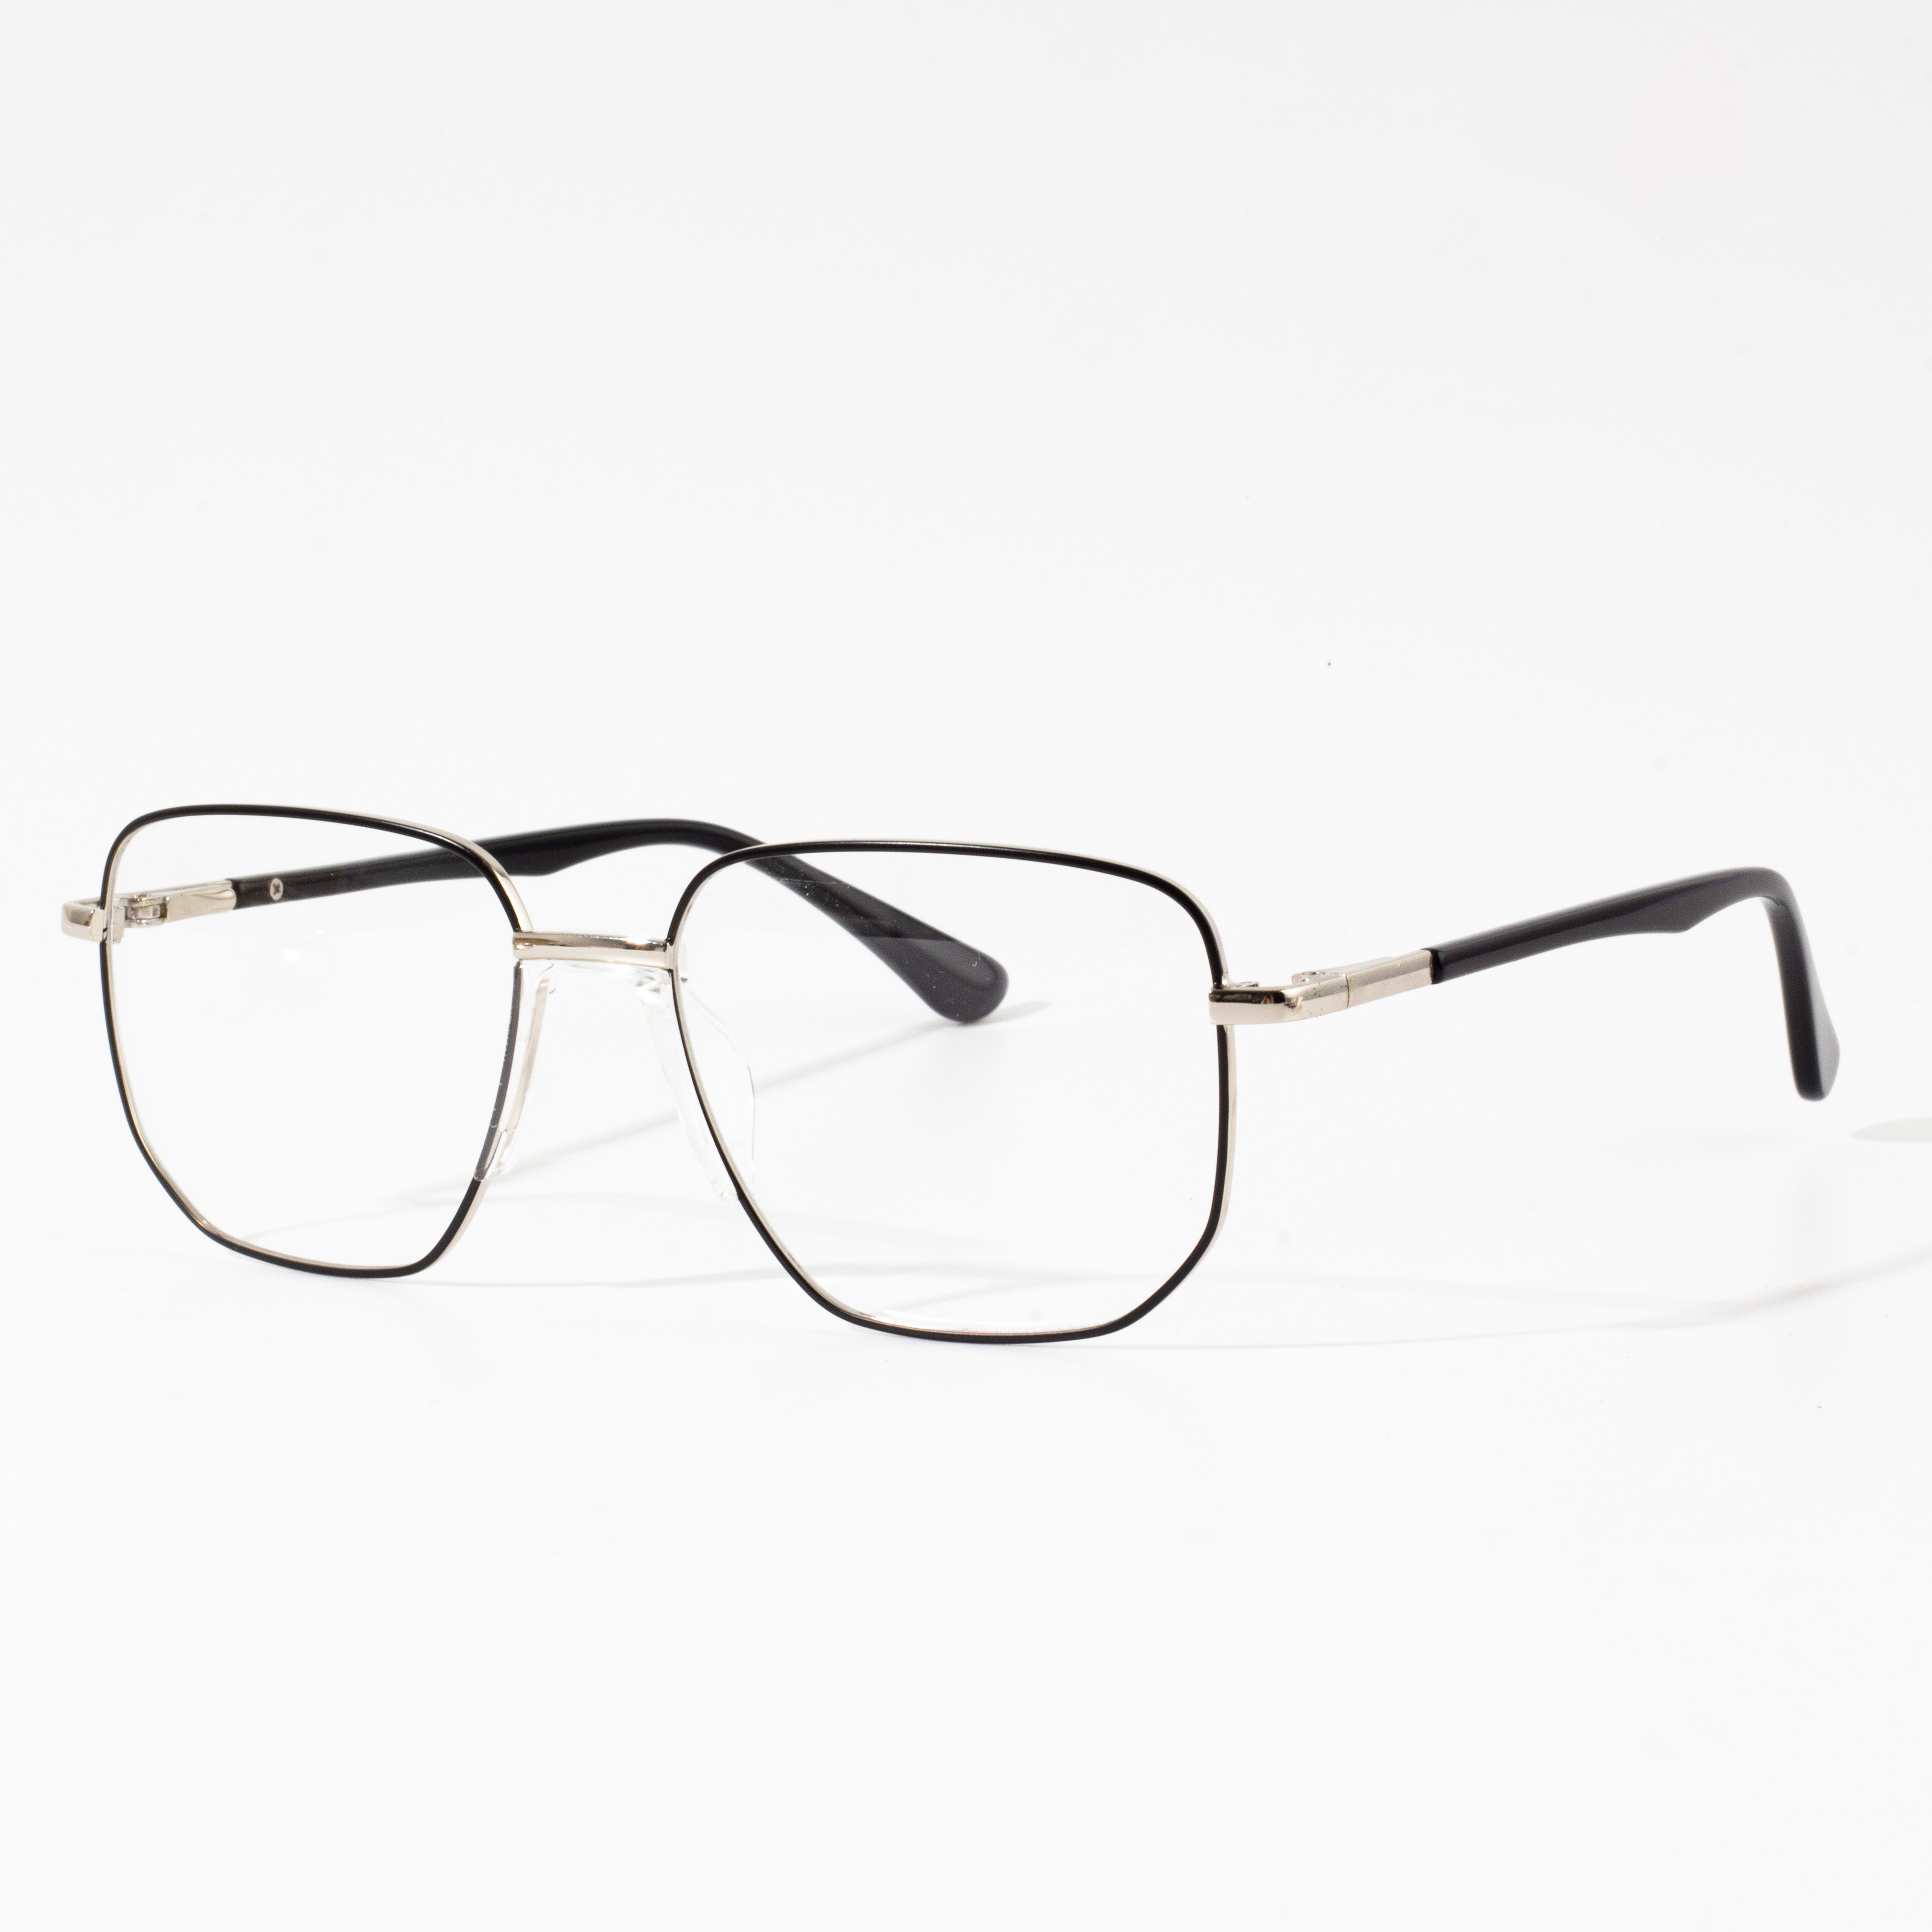 Titanium Glasses Frame (10)